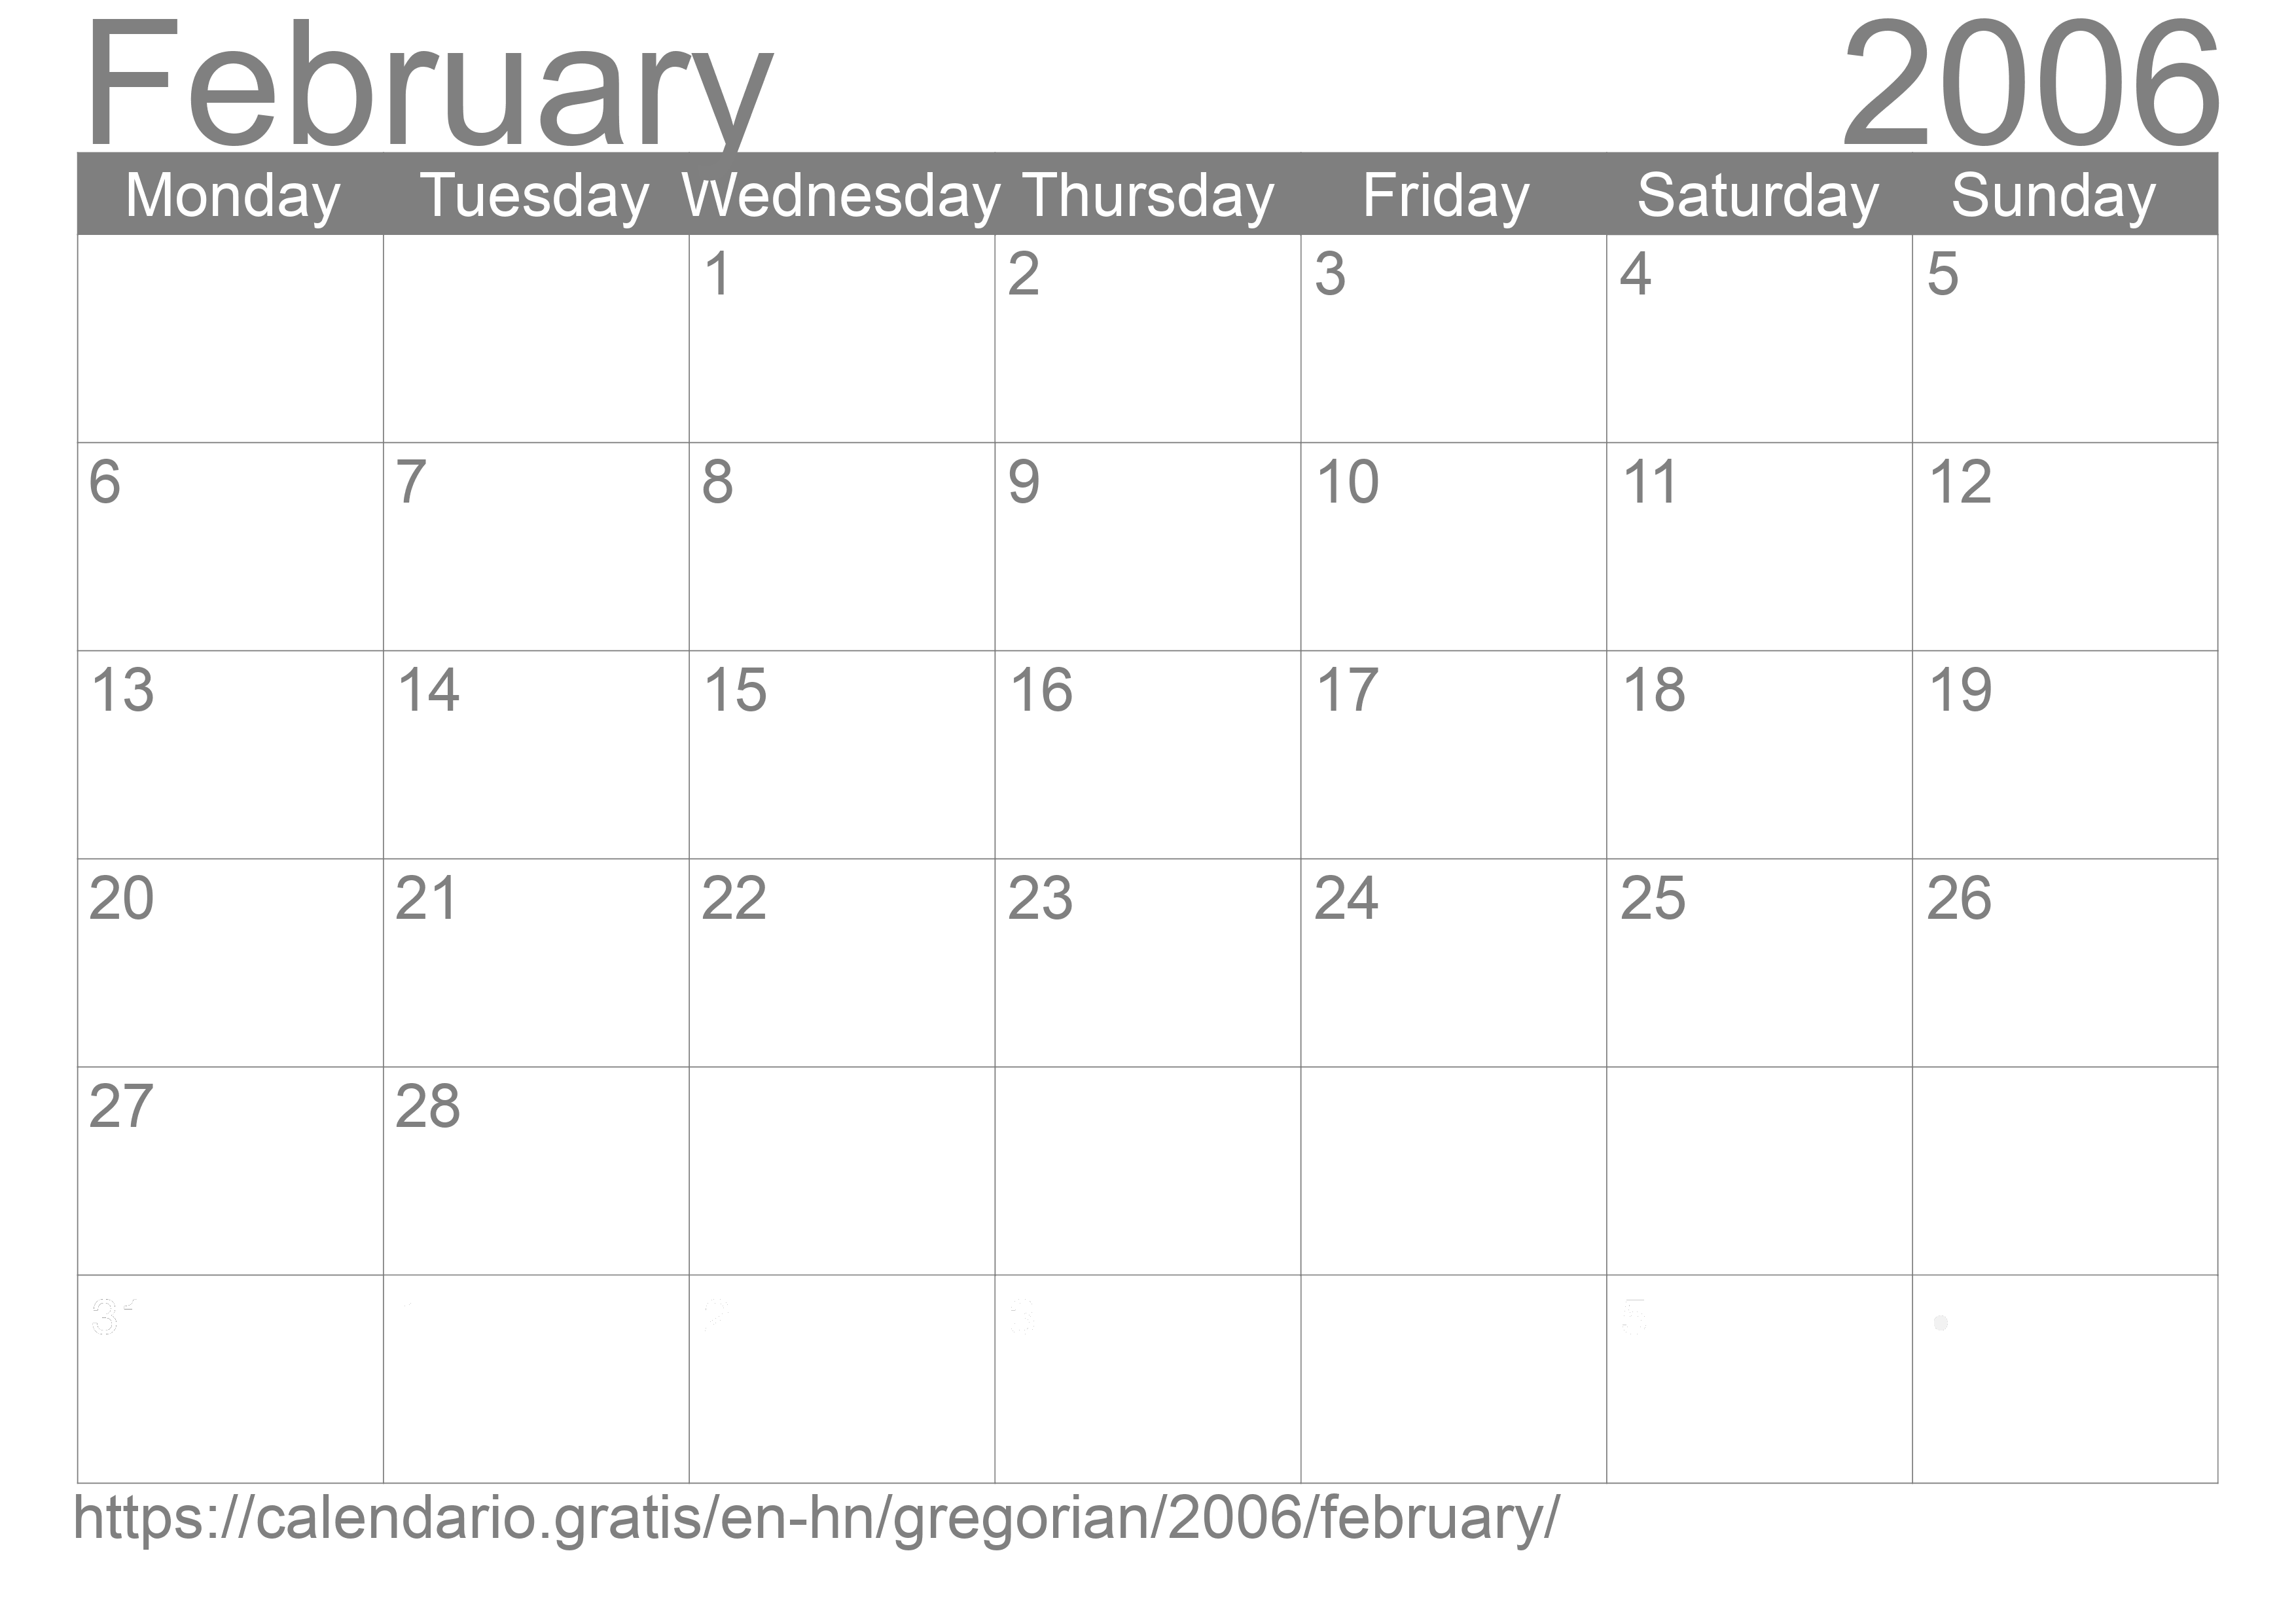 Calendar February 2006 to print